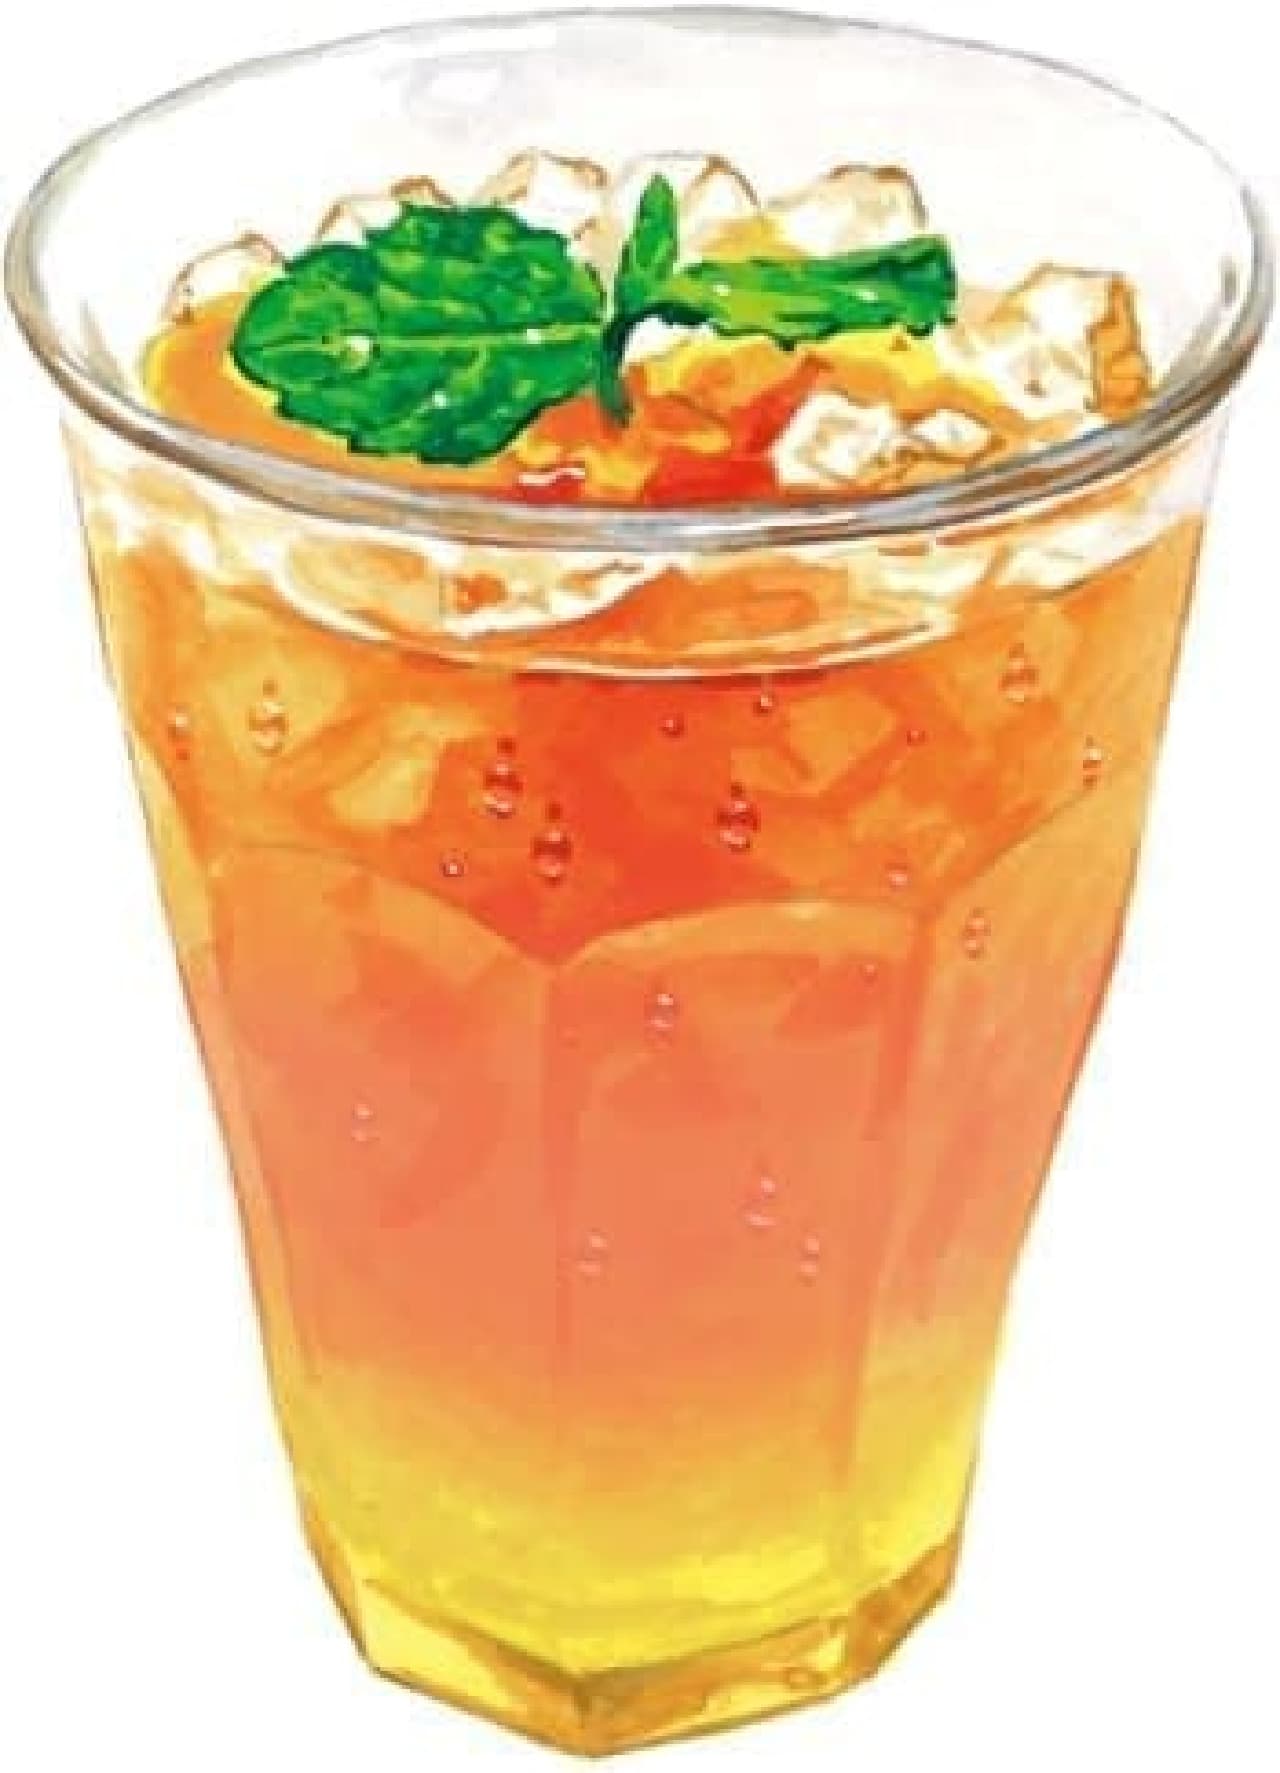 Tropical iced tea (image)